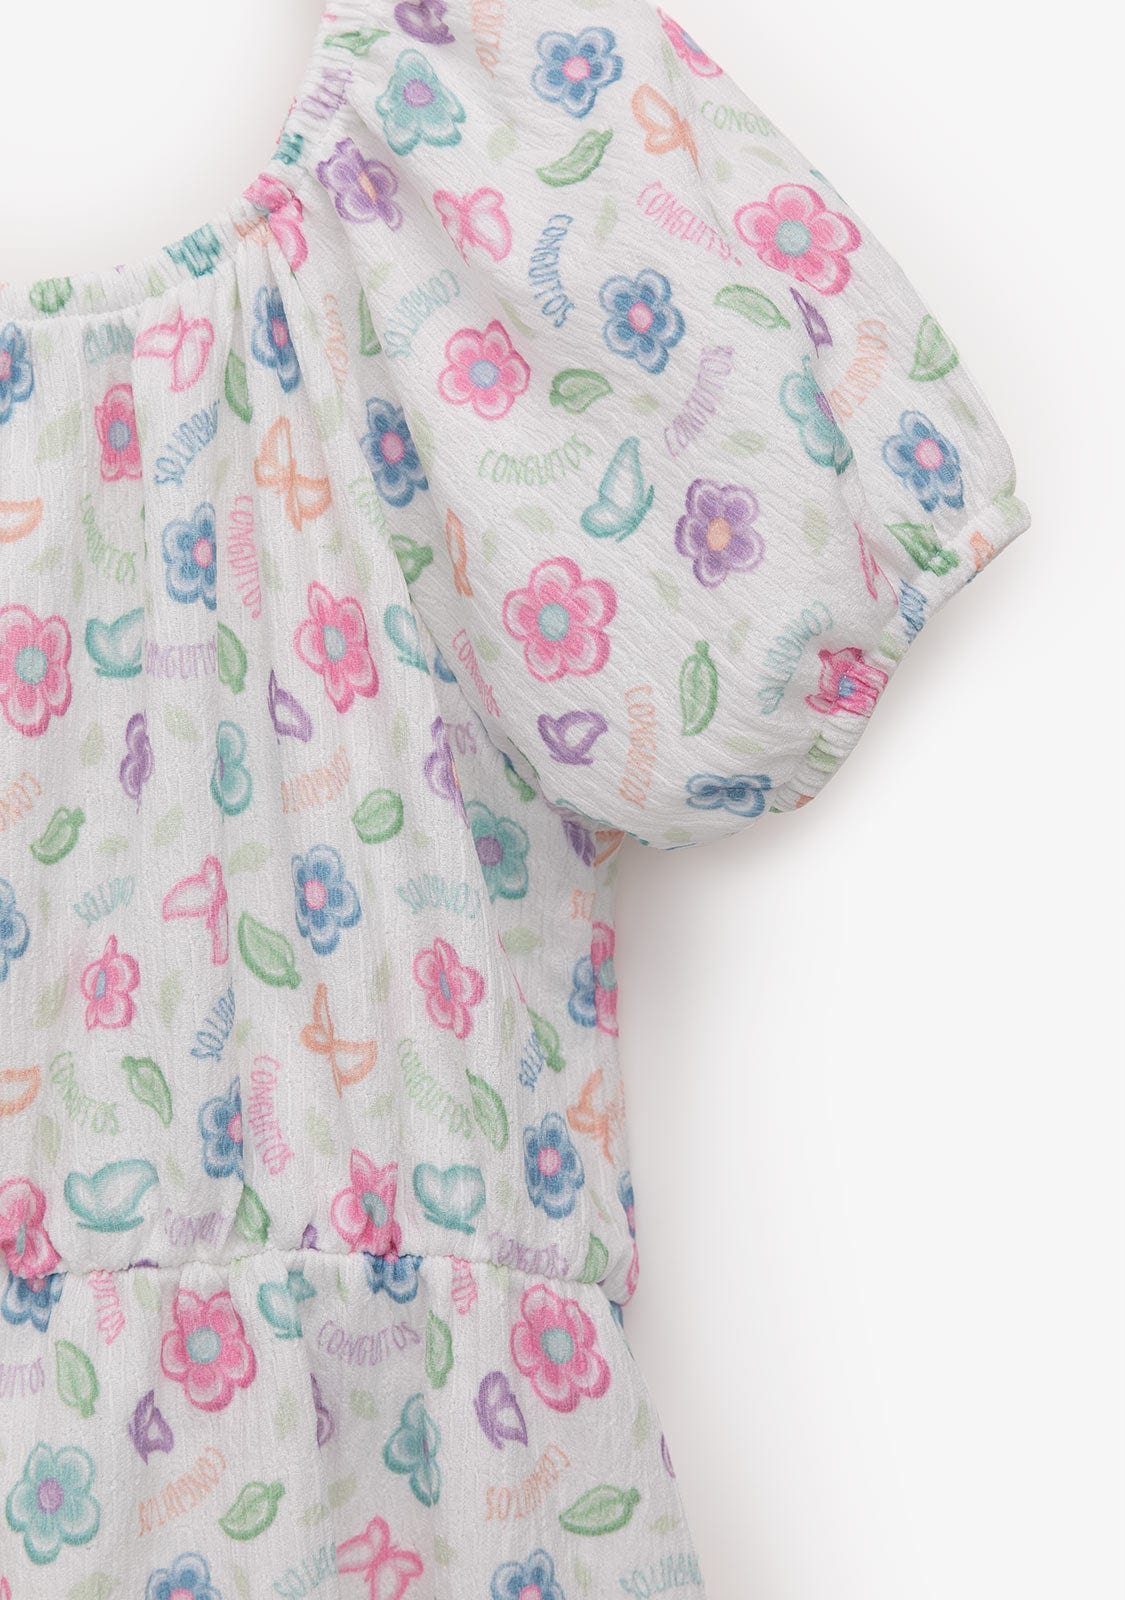 CONGUITOS TEXTIL Clothing Girl´s Flowers Print White Conguitos Dress